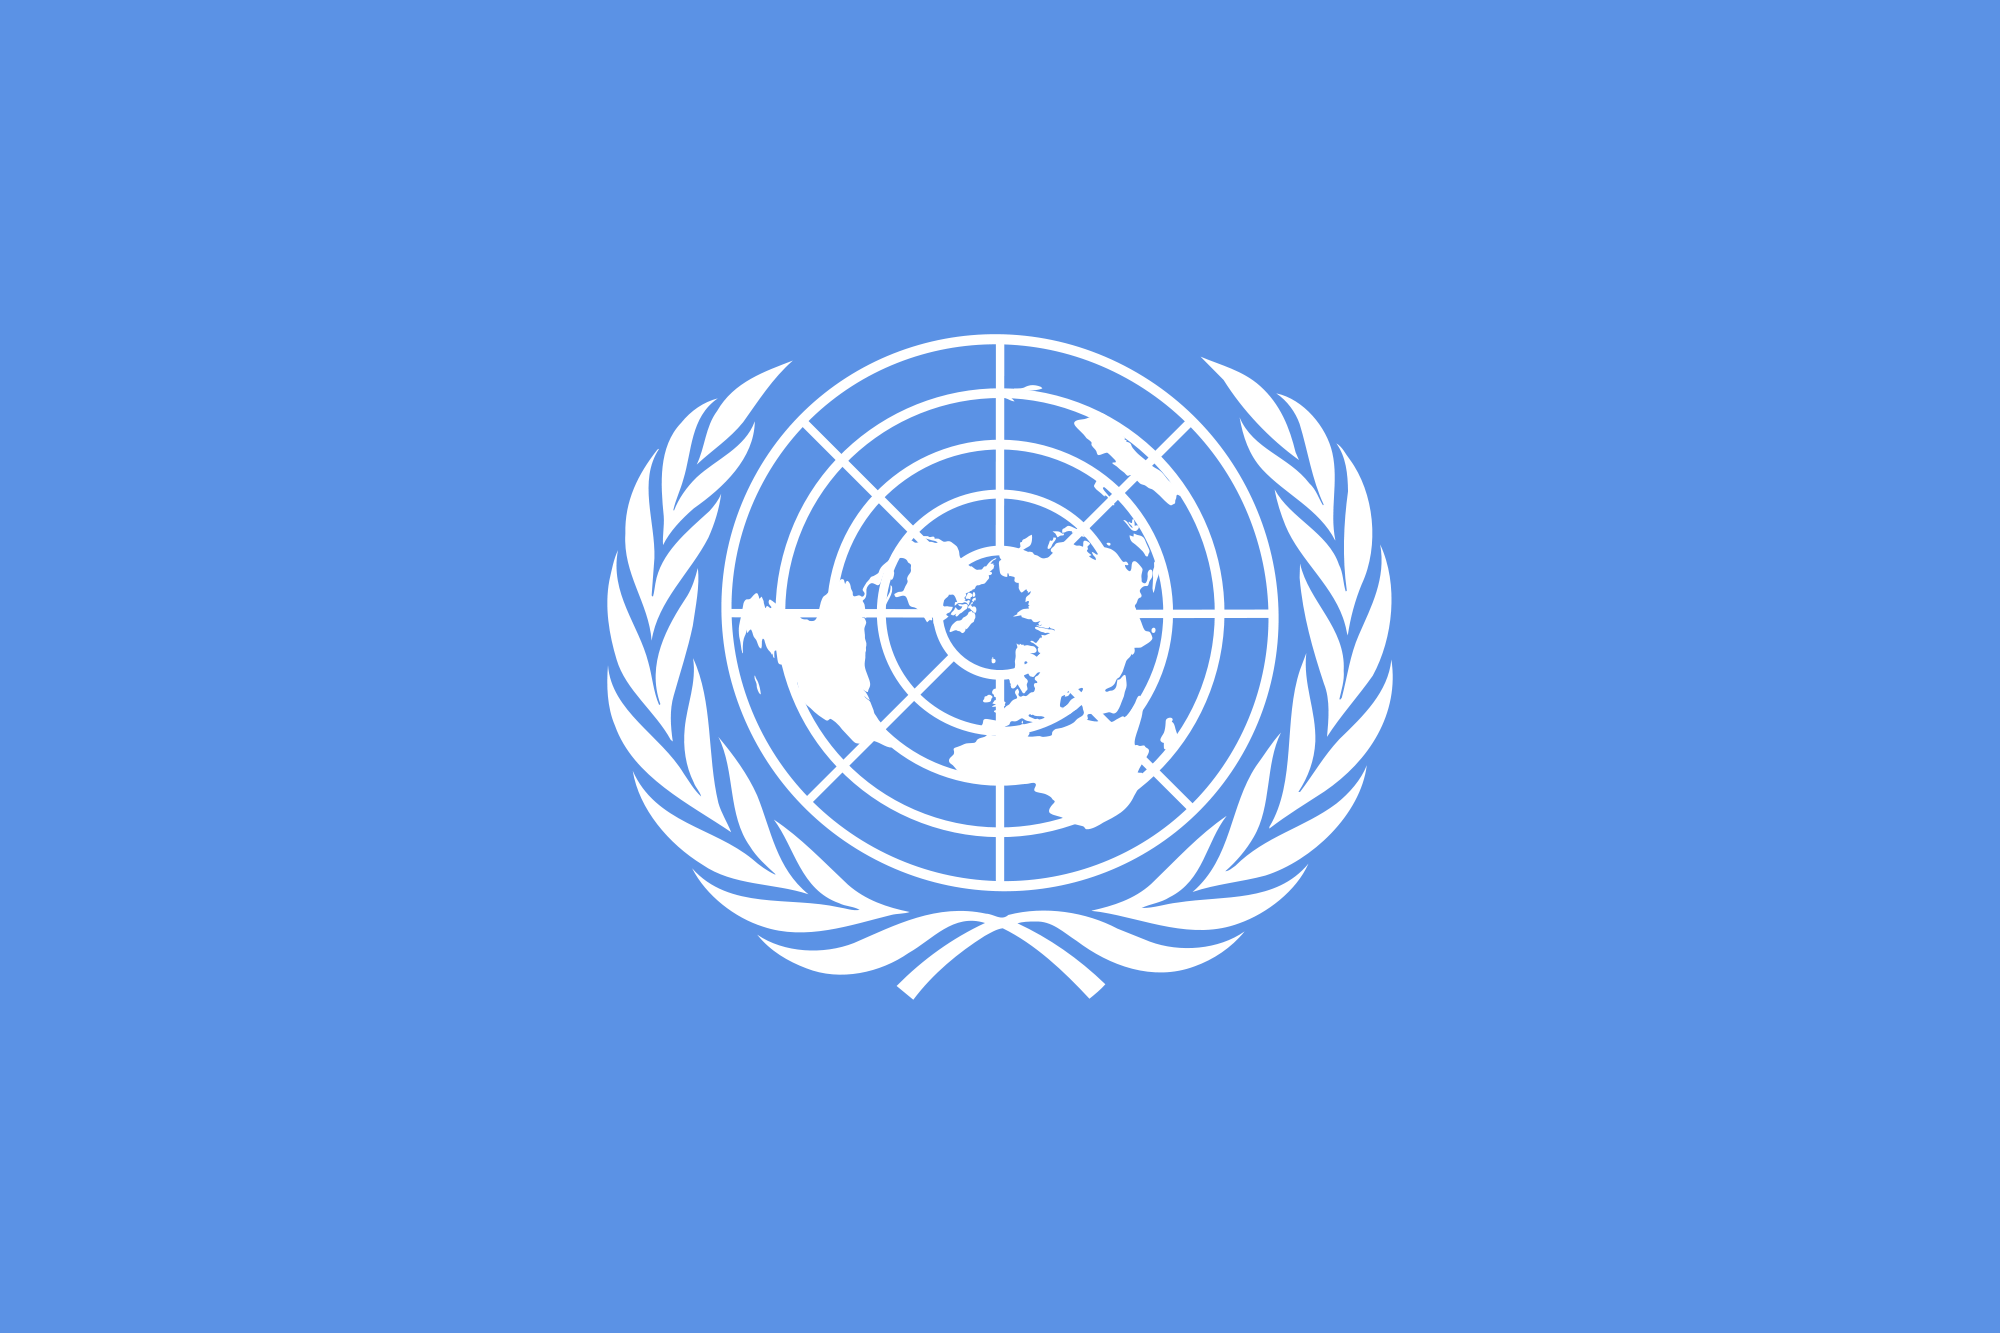 Un Flag Logo - File:UN flag.png - Wikimedia Commons